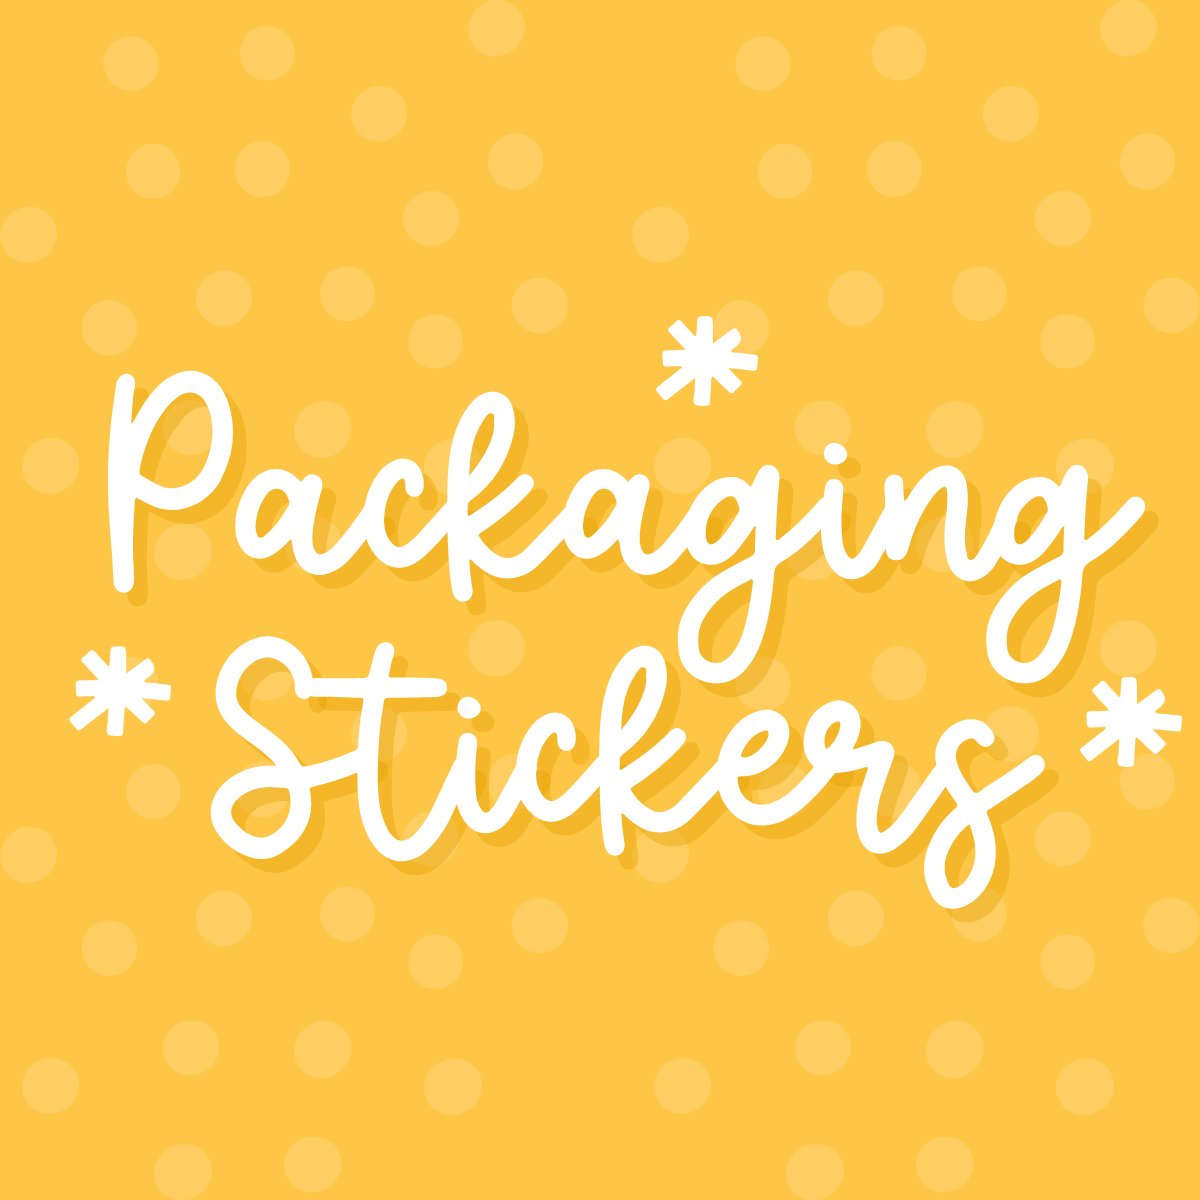 Packaging sticker sheets